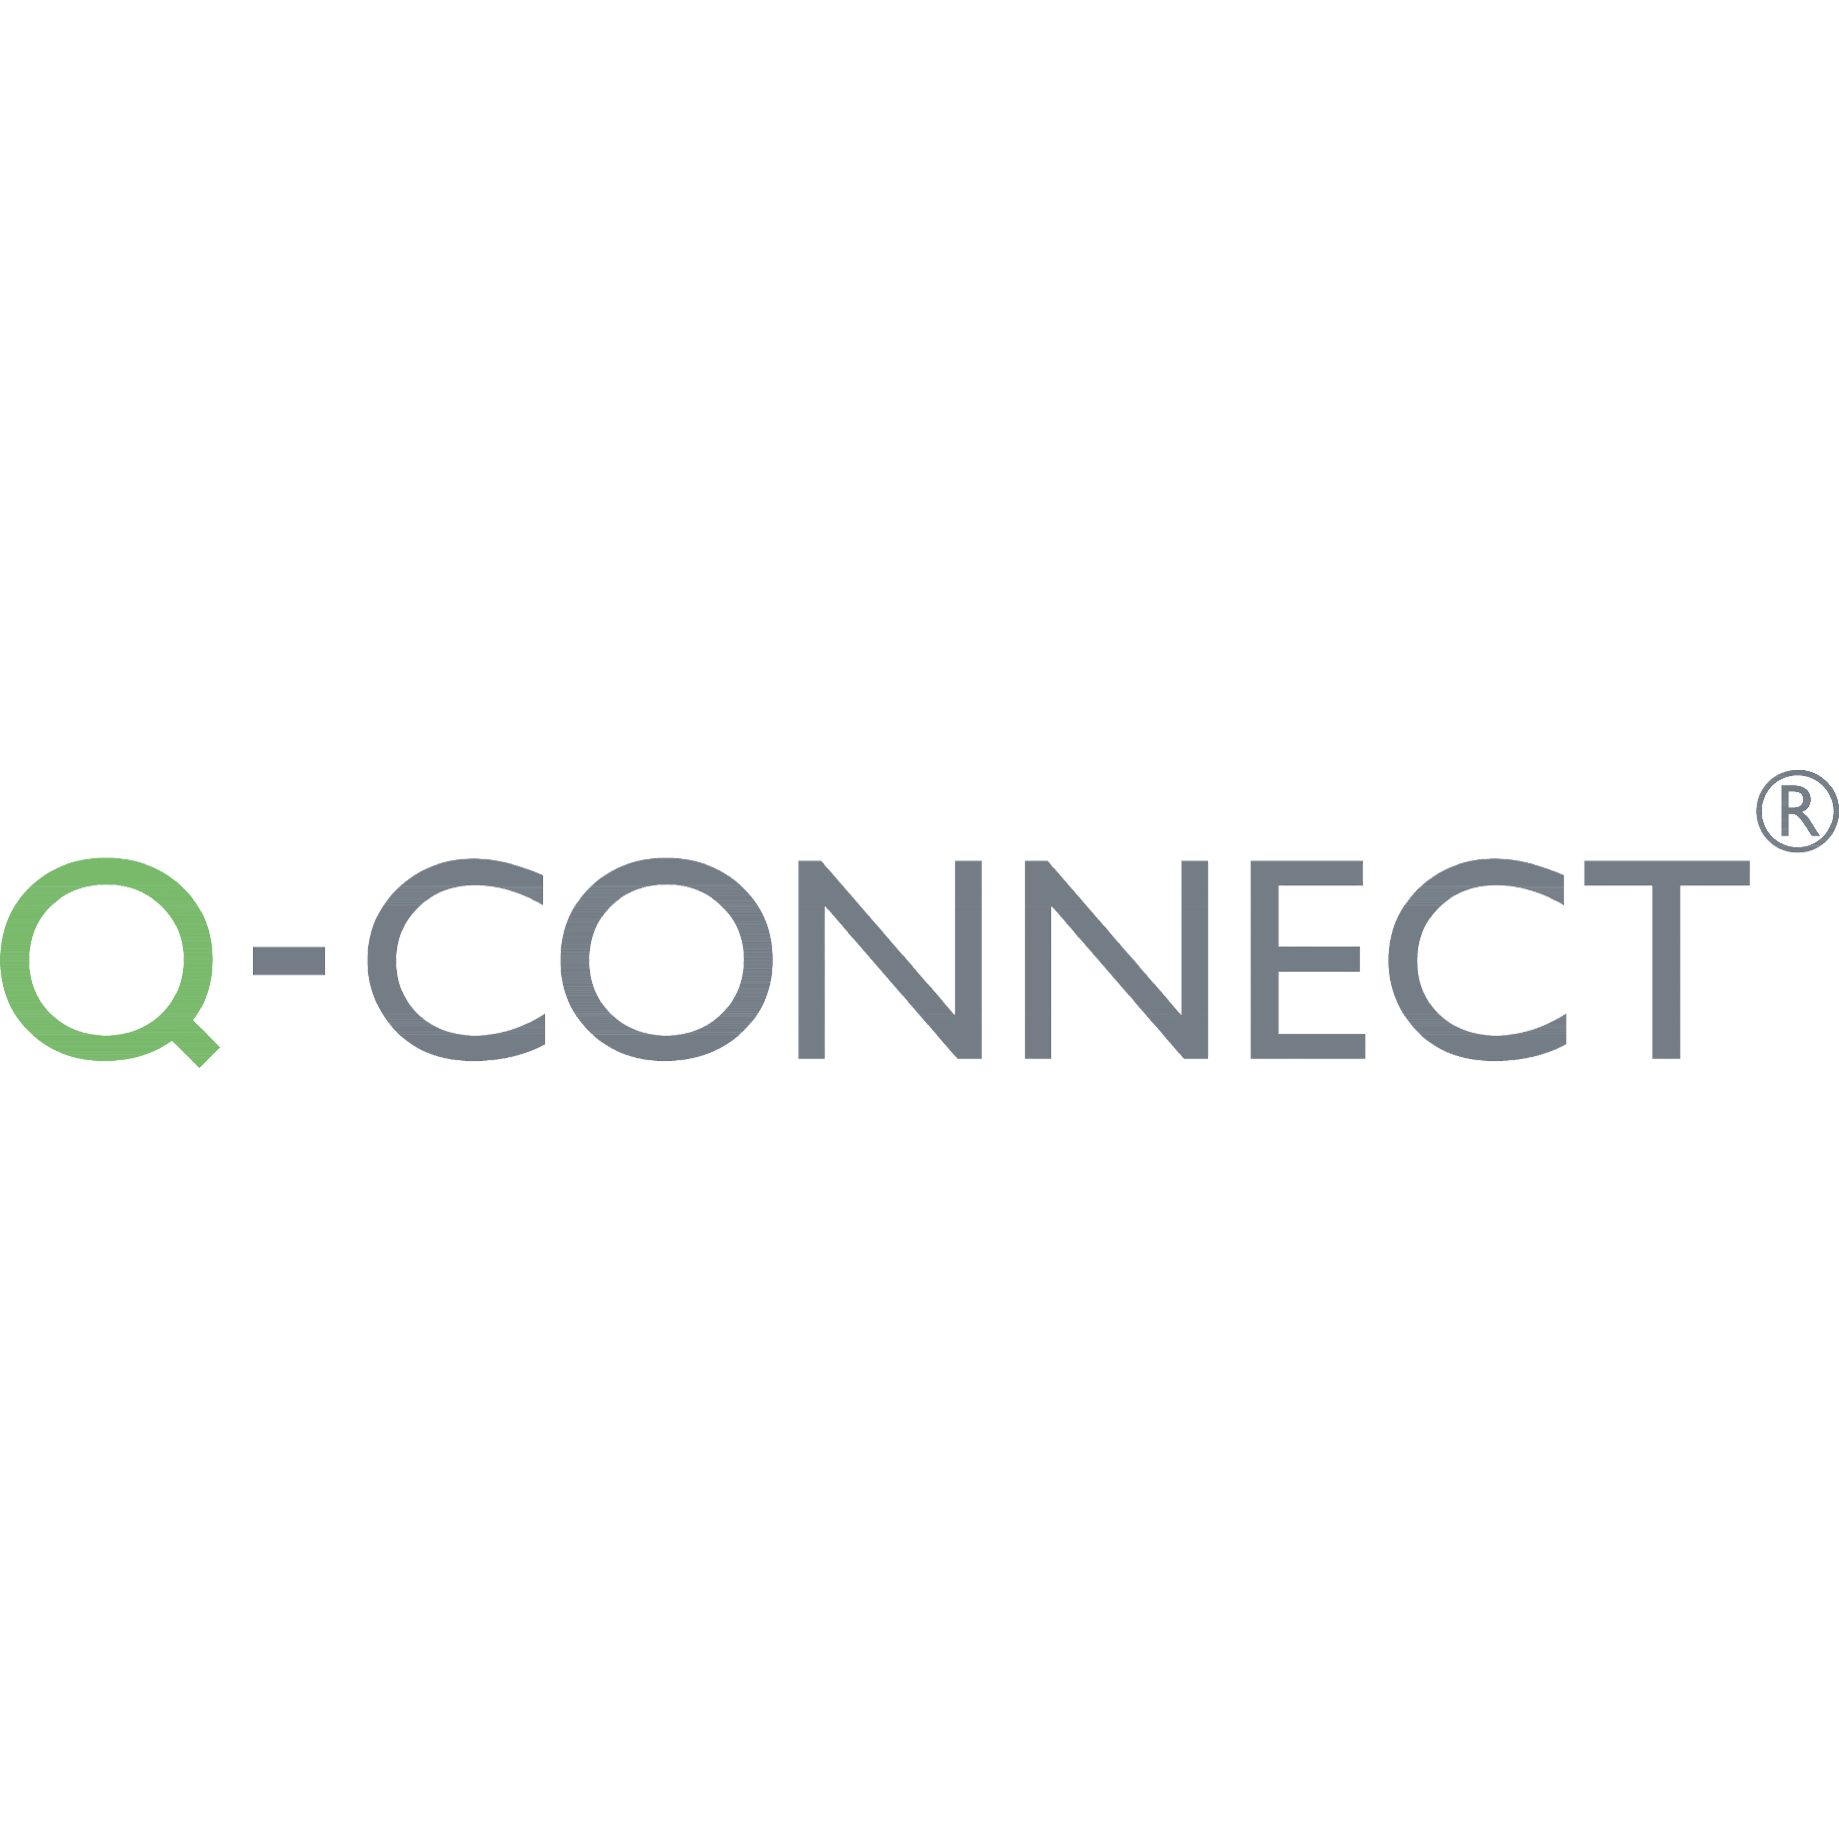 Q-Connect®